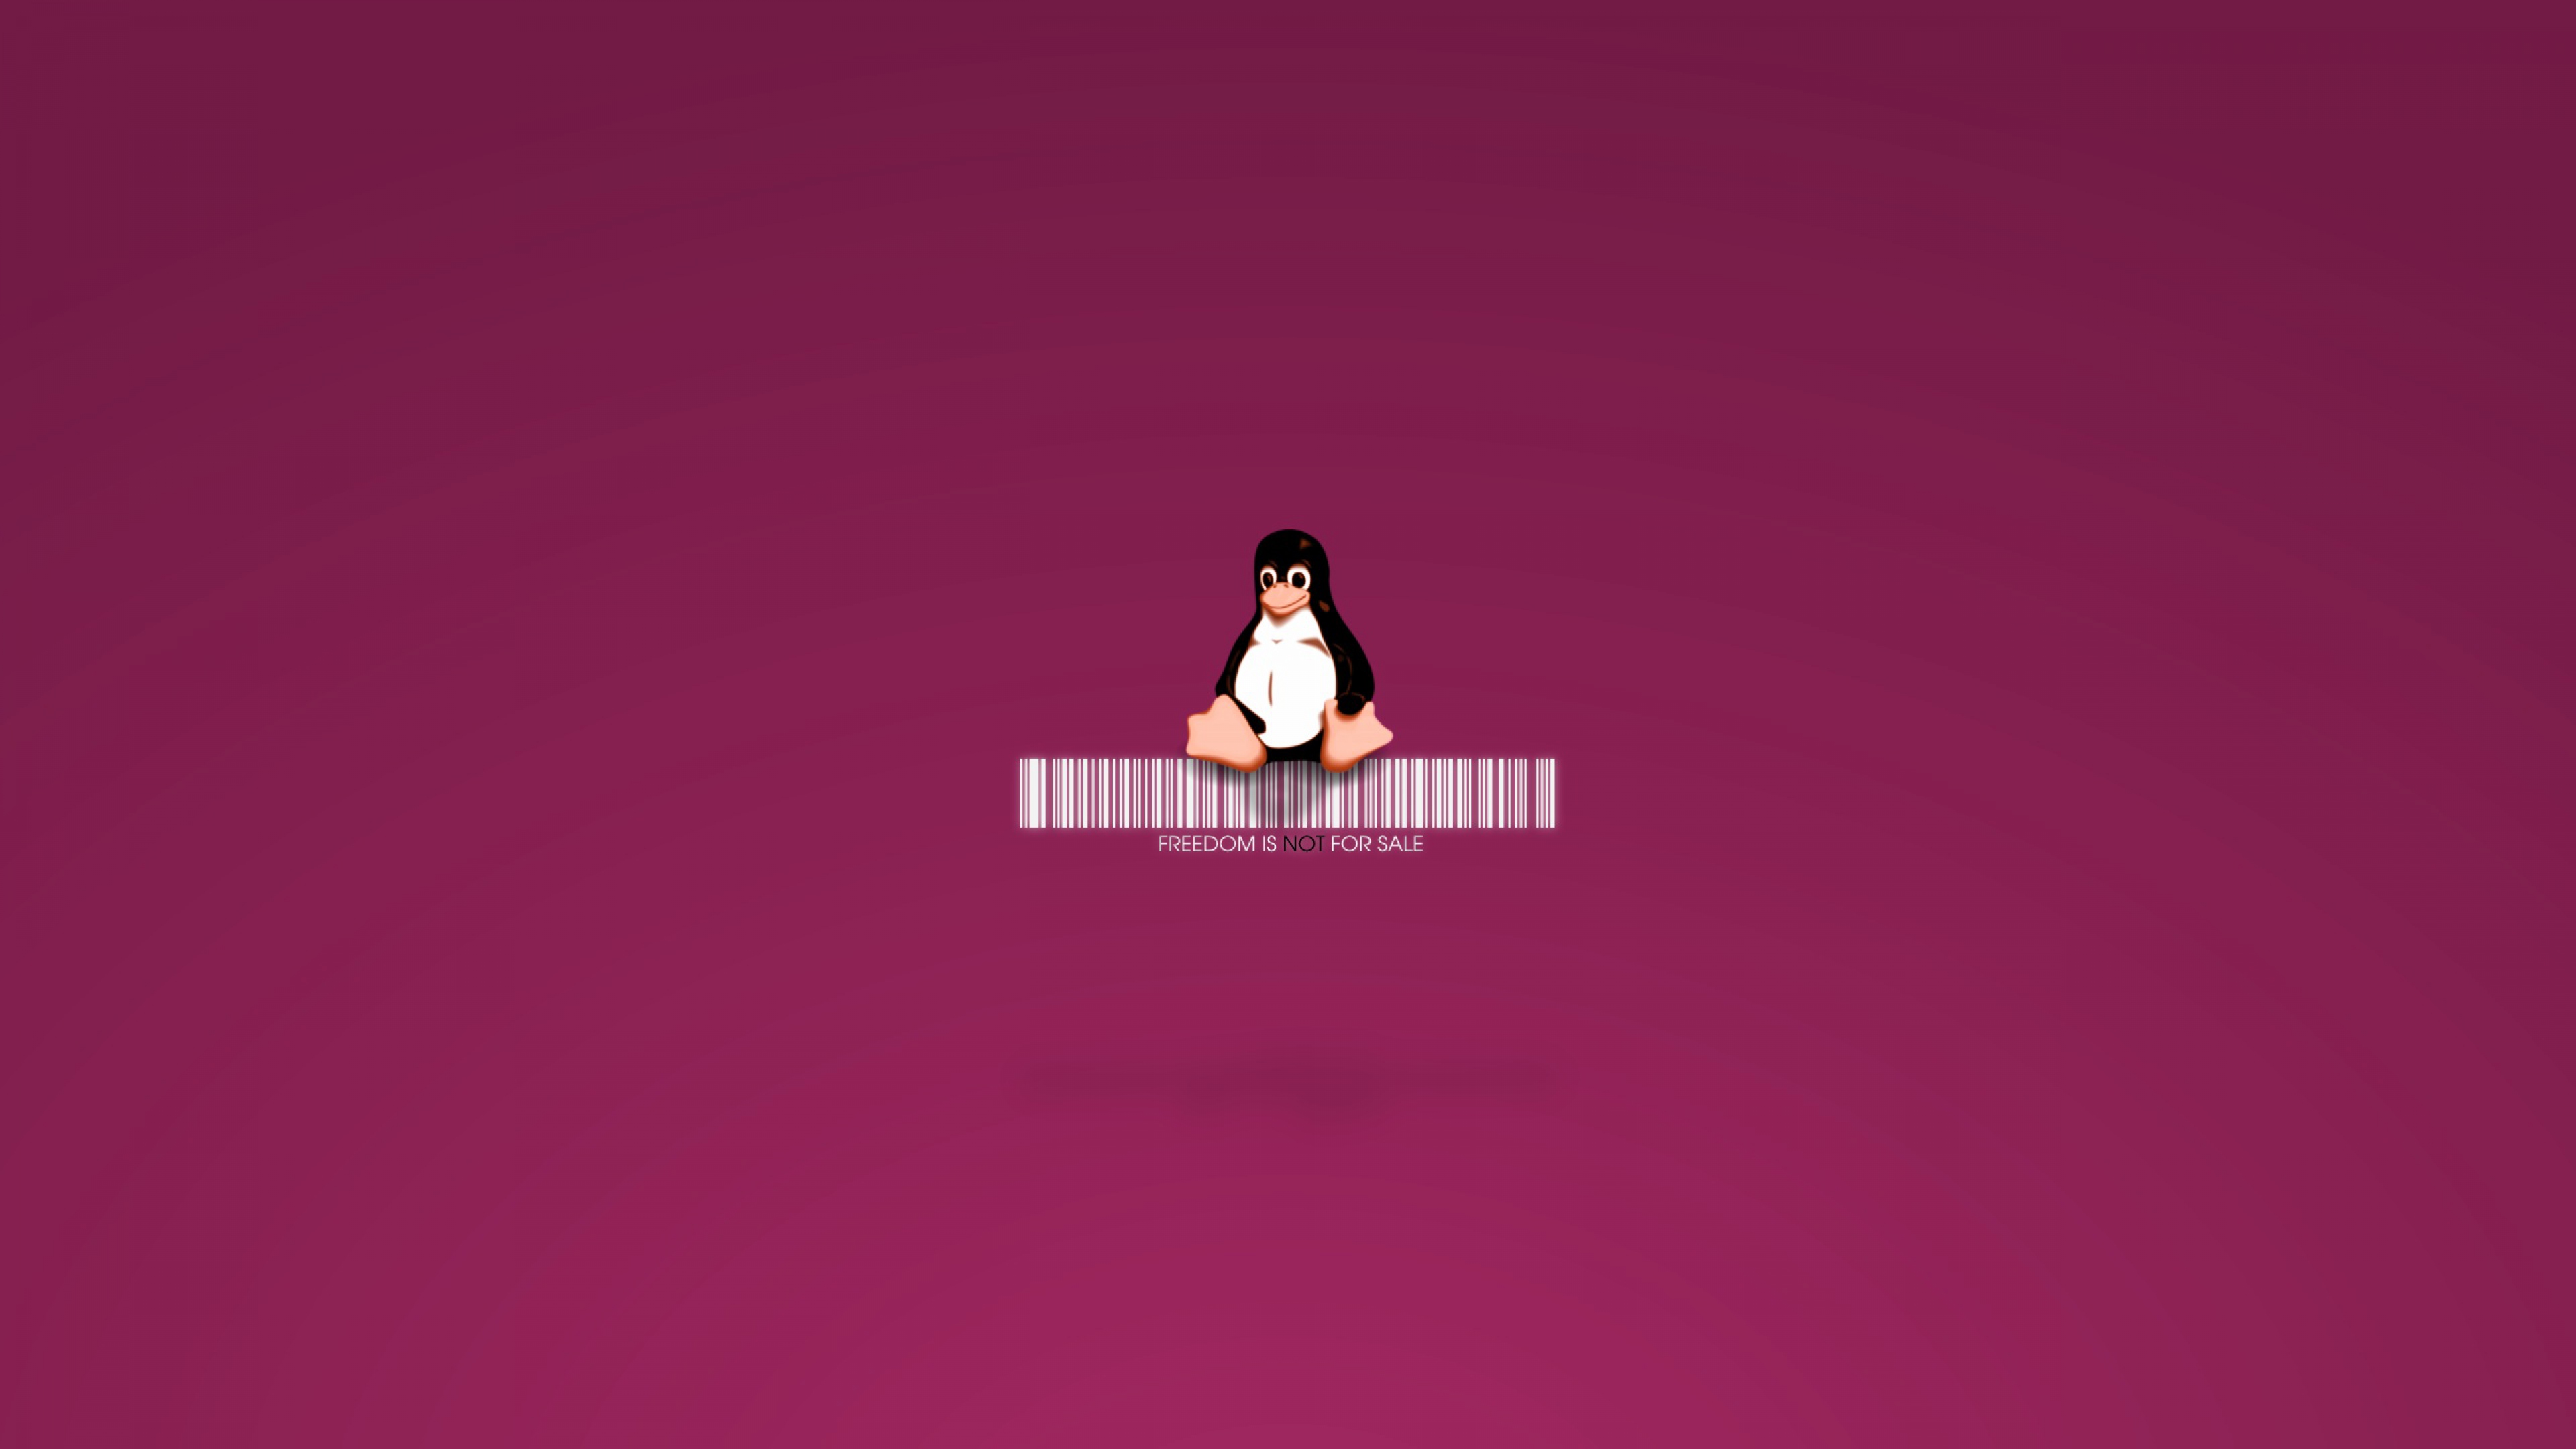 Linux Penguin Wallpaper | HD Wallpapers